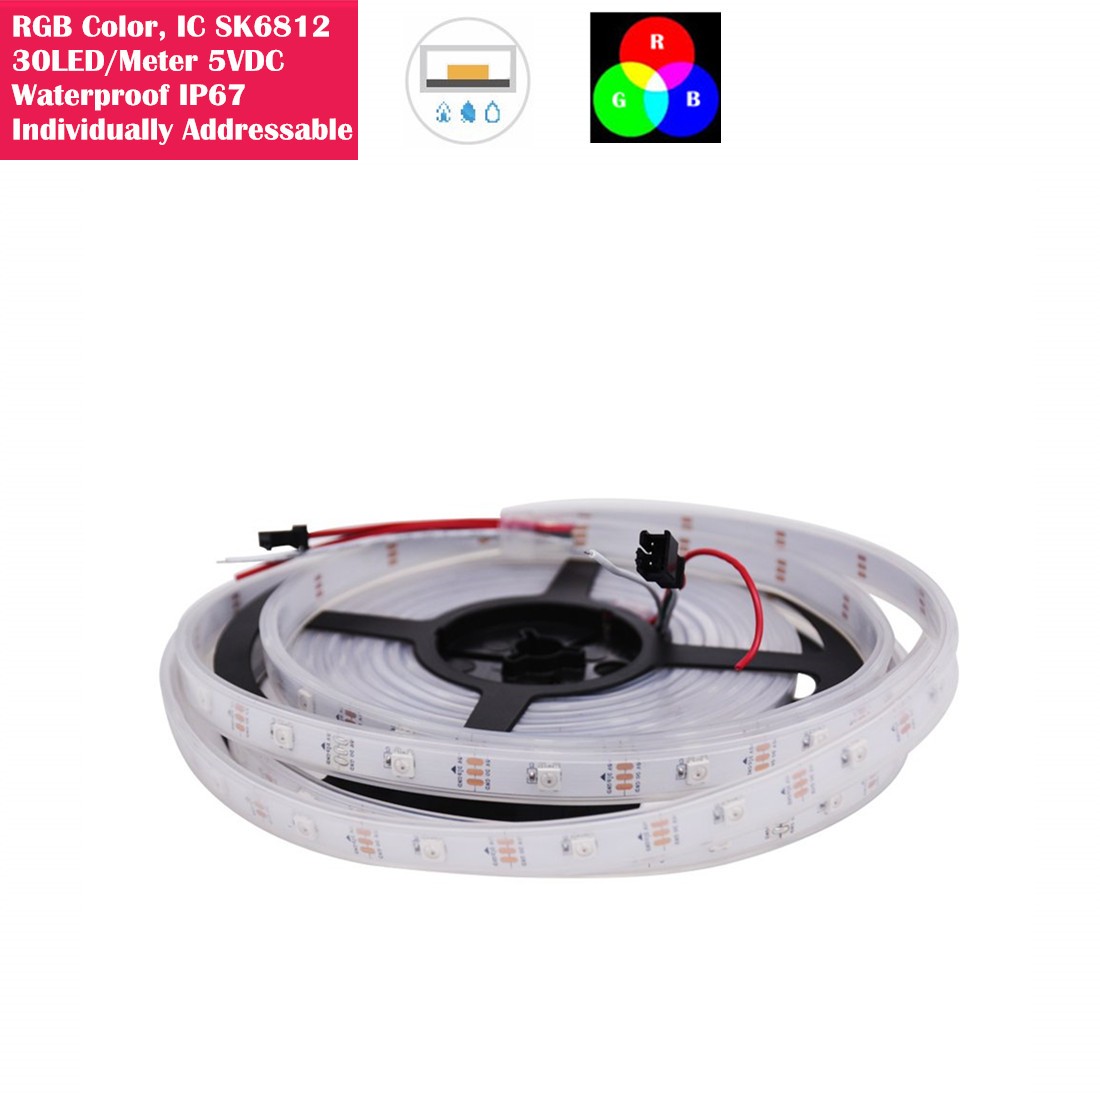 Buy WS2812B 5V Addressable RGB IP67 Waterproof LED Strip - 5m Online at